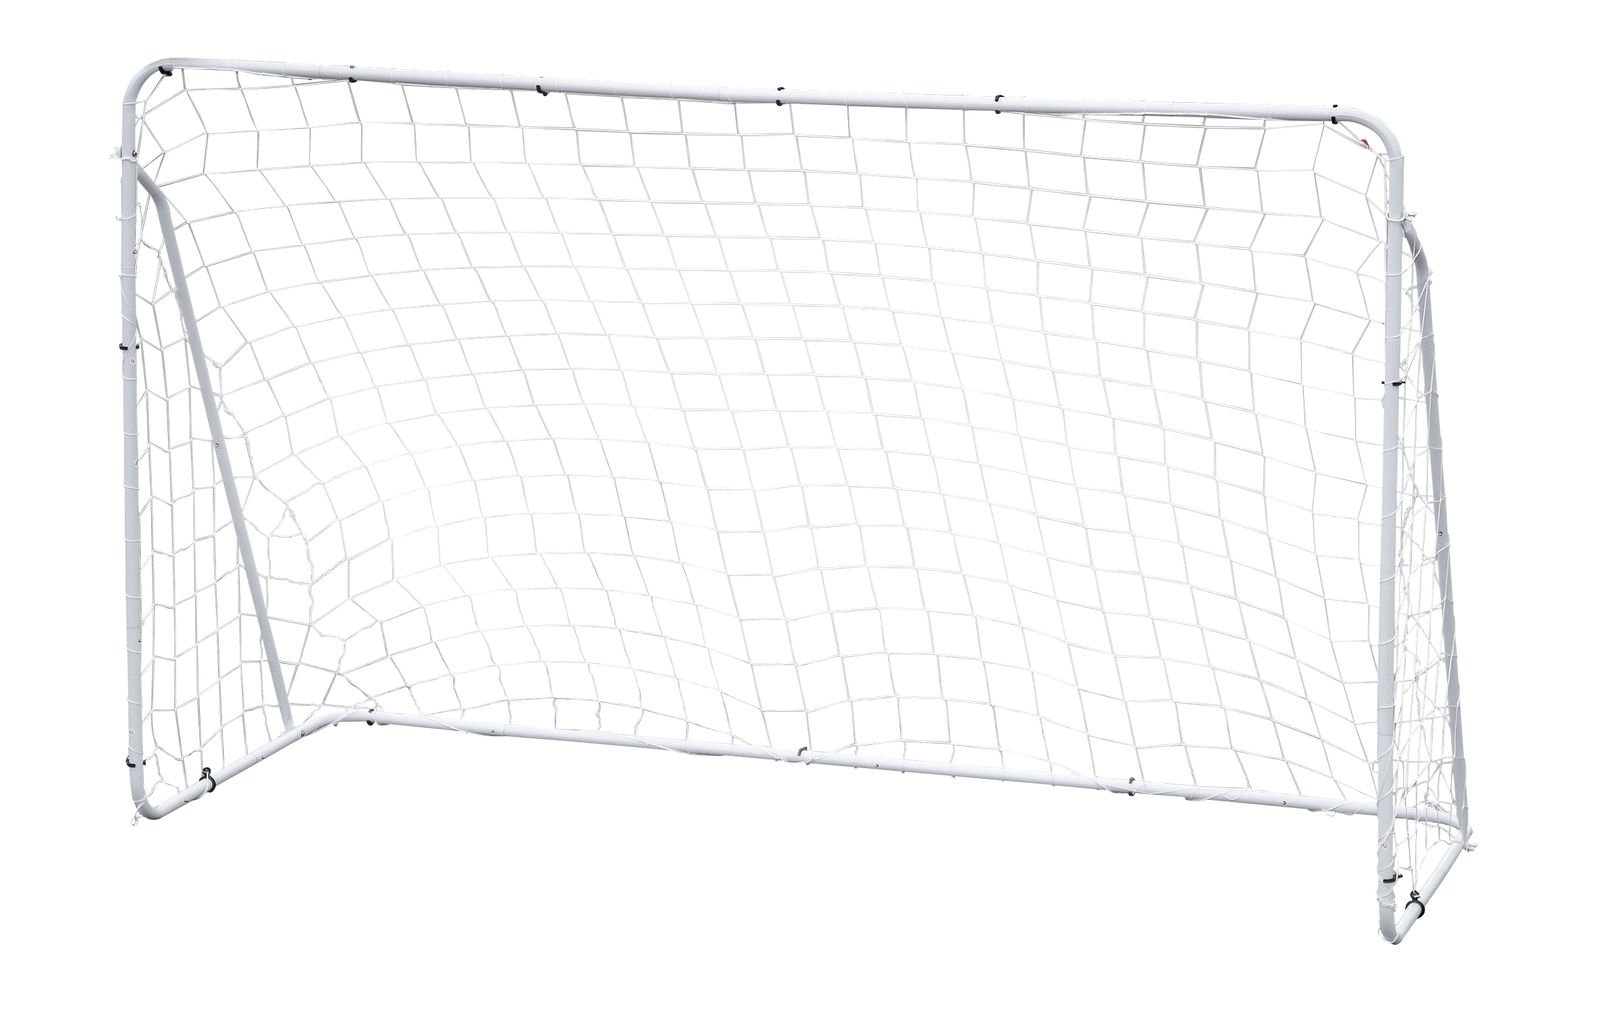 Vini Sport - Large football goal 240x150 cm (24407)